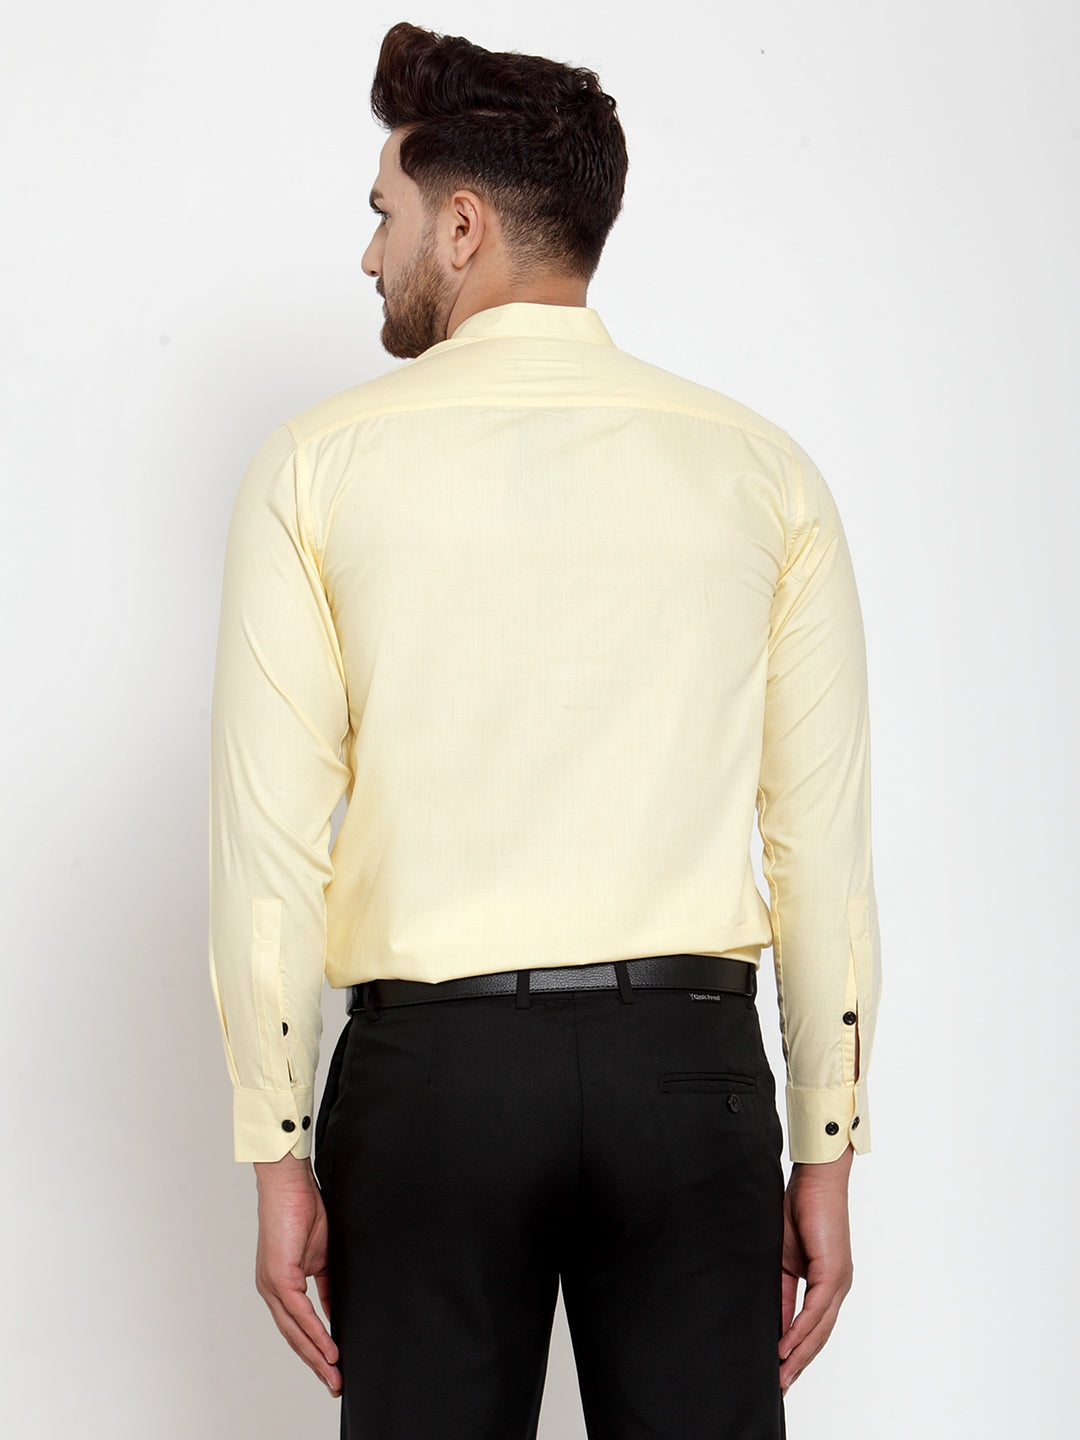 Men's Yellow Cotton Solid Mandarin Collar Formal Shirts ( SF 726Lime ) - Jainish